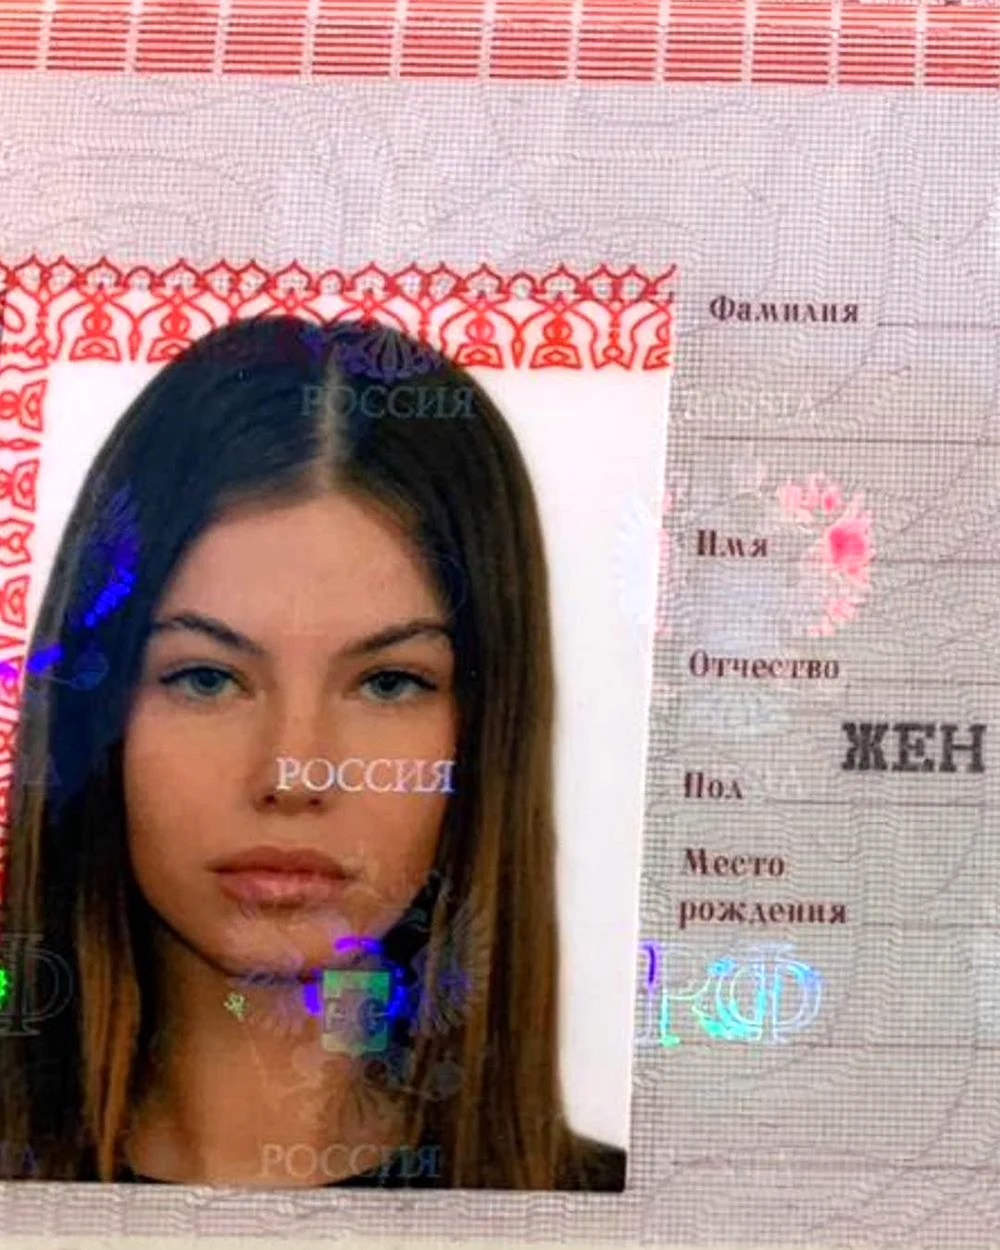 Passport beautiful photo